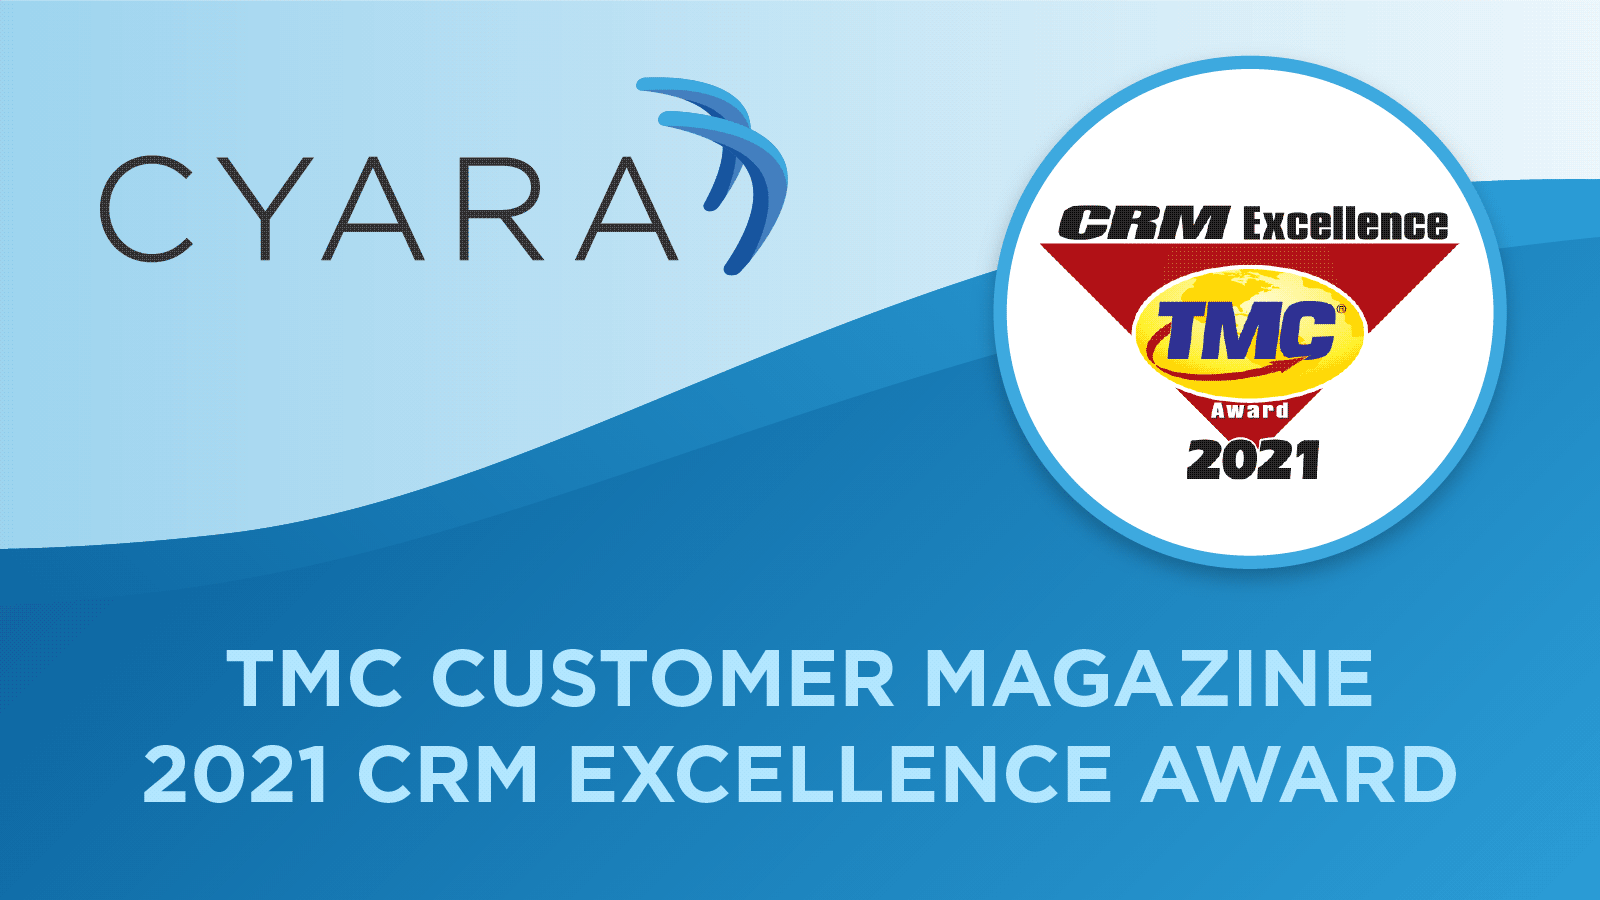 Cyara-TMC CRM Excellence Award 2021